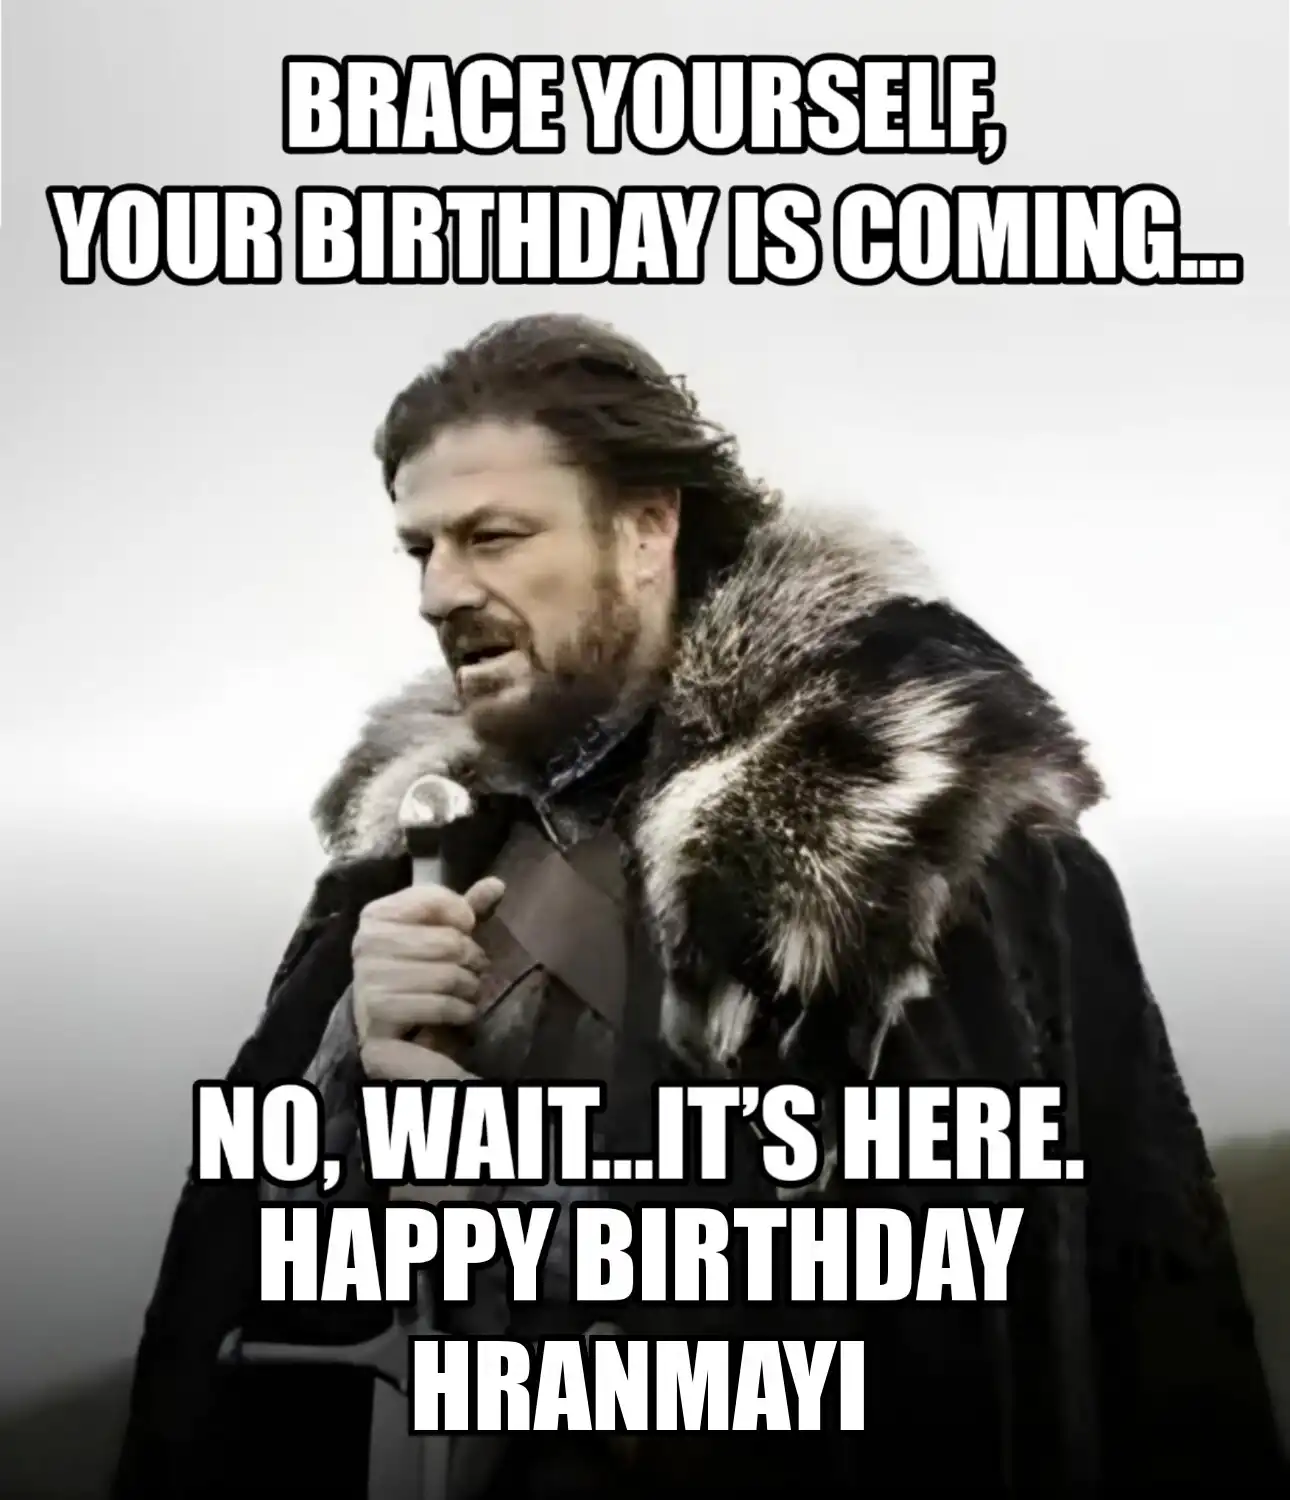 Happy Birthday Hranmayi Brace Yourself Your Birthday Is Coming Meme